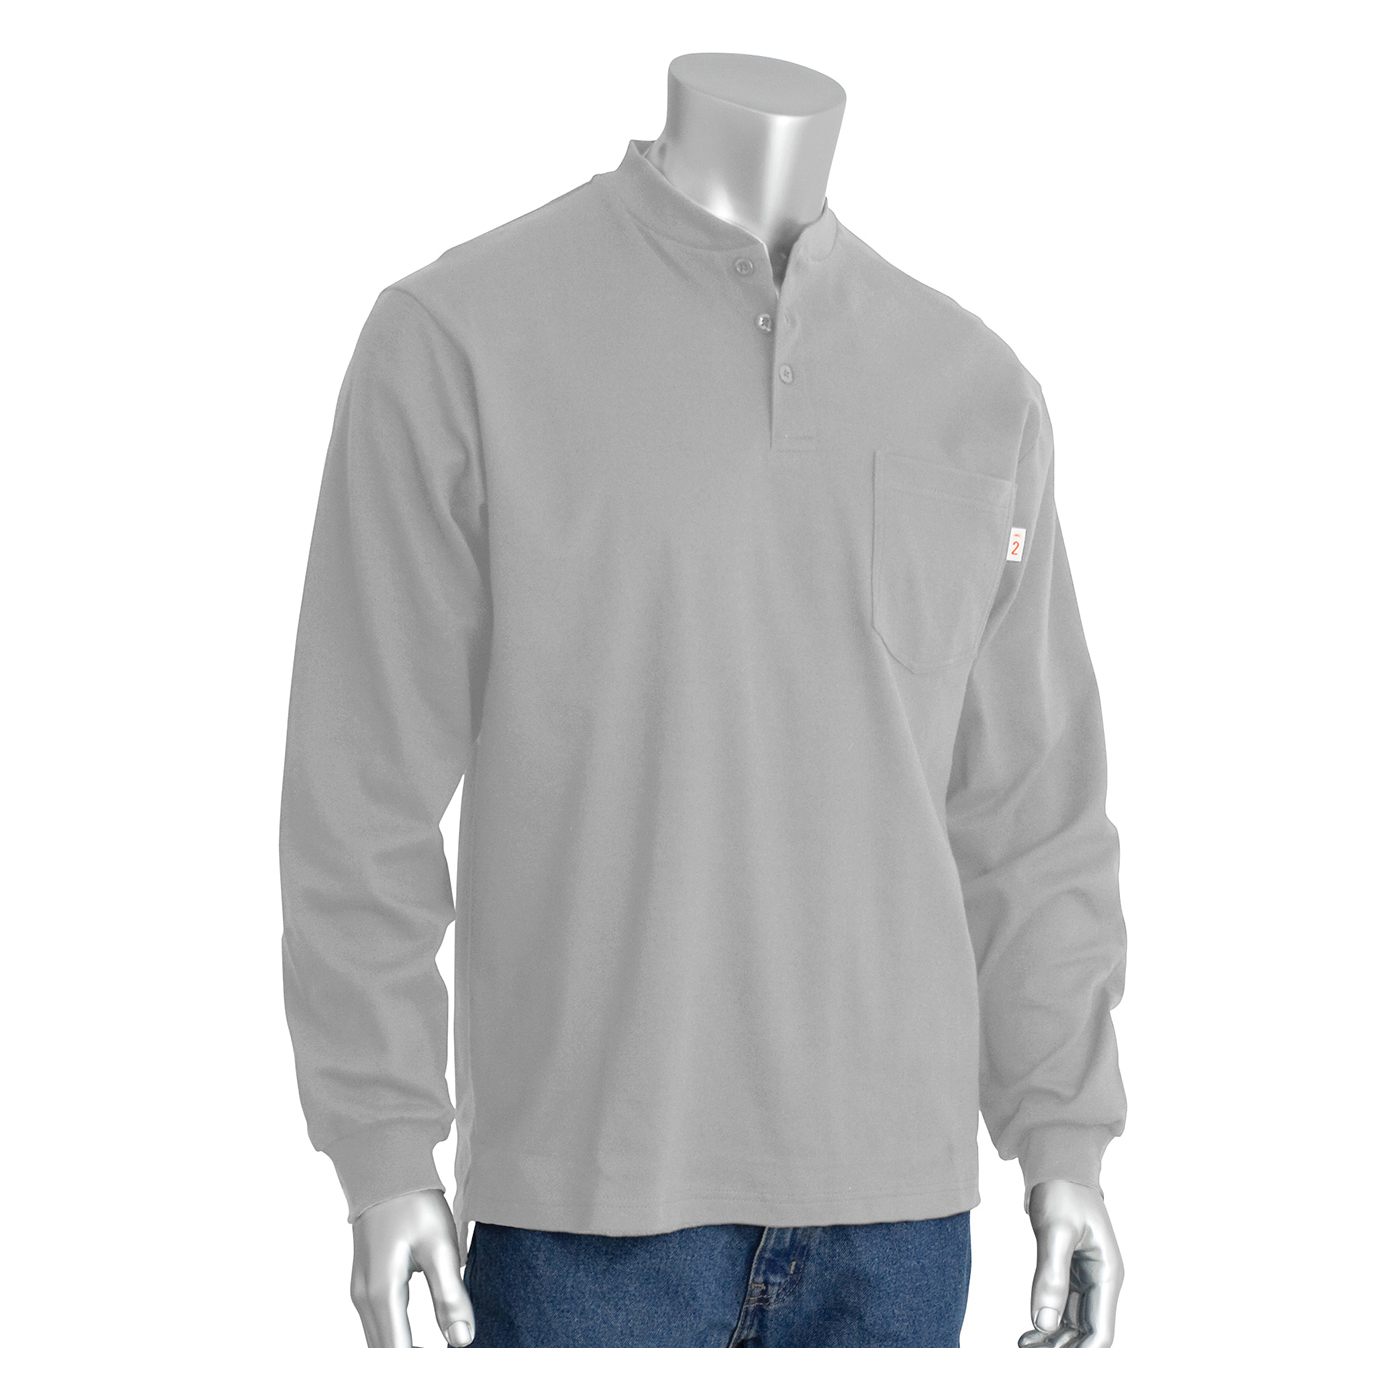 PIP® 385-FRHN-(LG)-2X Arc and Flame-Resistant Long Sleeve Henley Shirt, 2XL, Light Gray, Cotton Interlock Knit, 33-1/2 in L